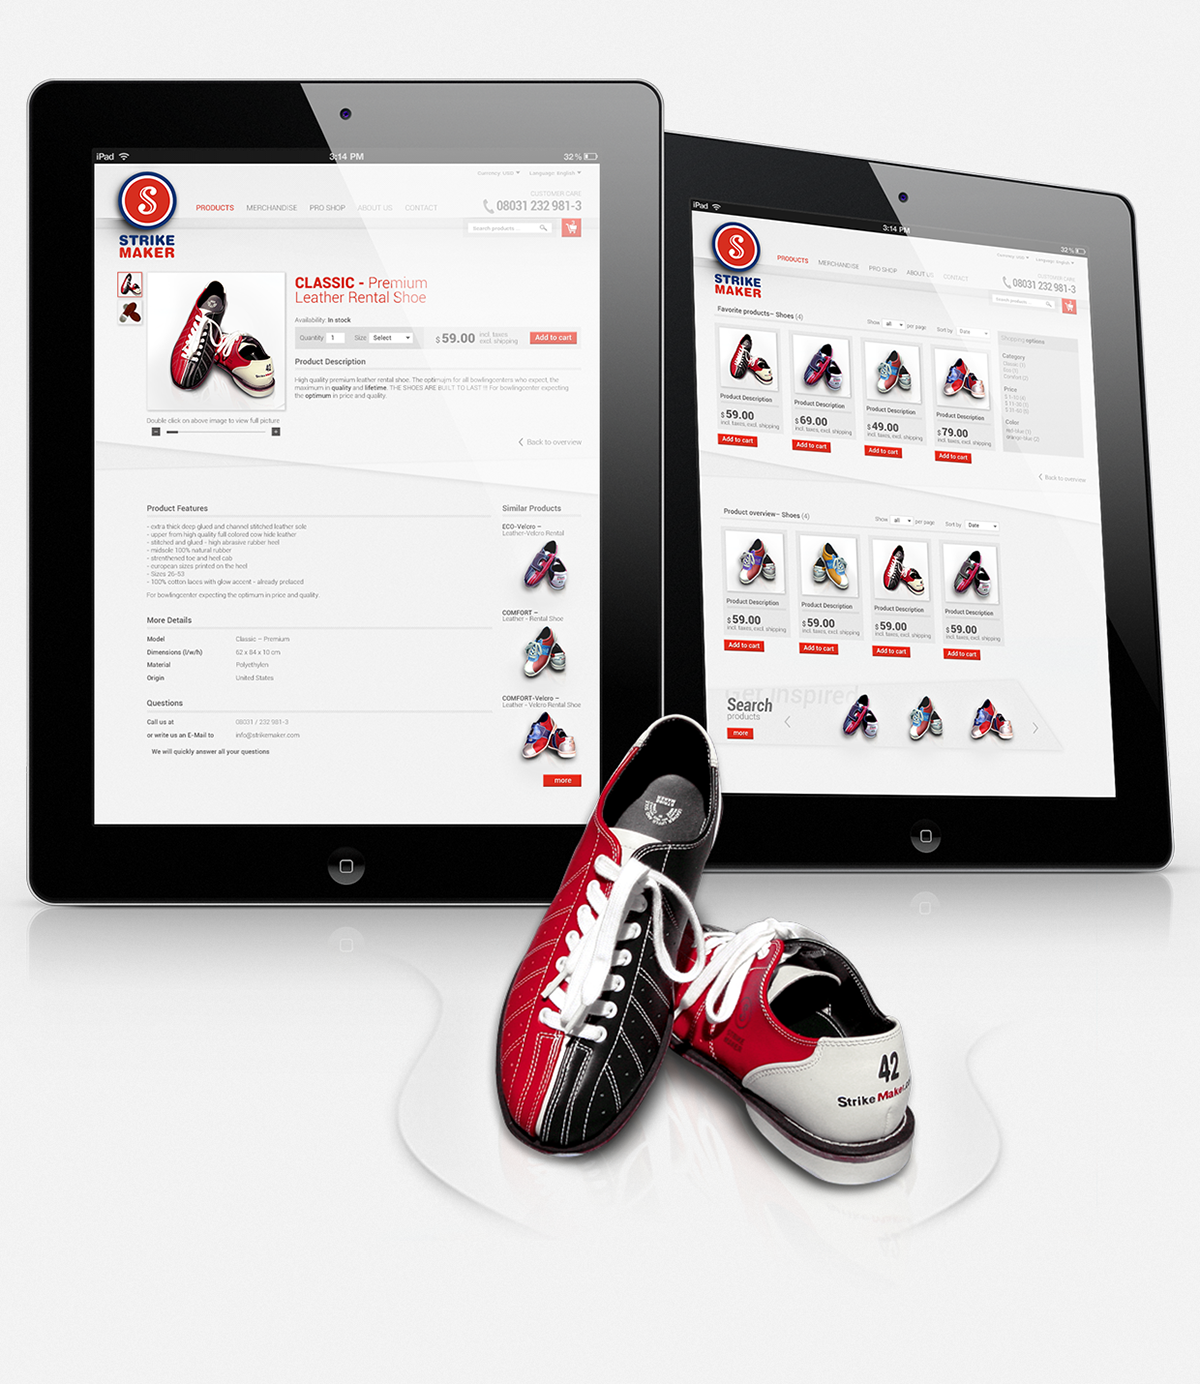 bowling strikemaker retailer design proposal Webdesign modern commissional work Responsive